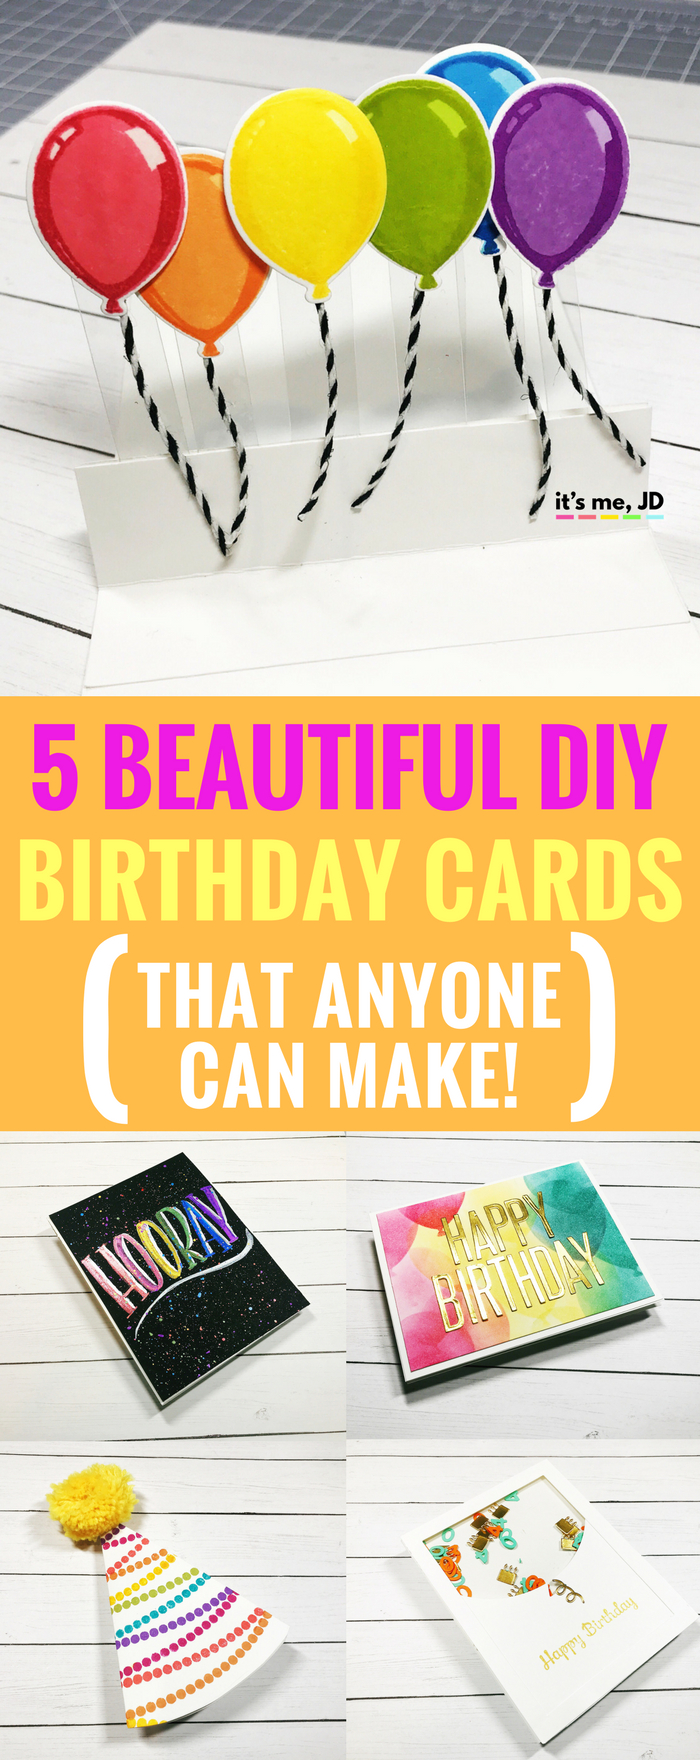 Happy Birthday Cards Ideas 5 Beautiful Diy Birthday Card Ideas That Anyone Can Make